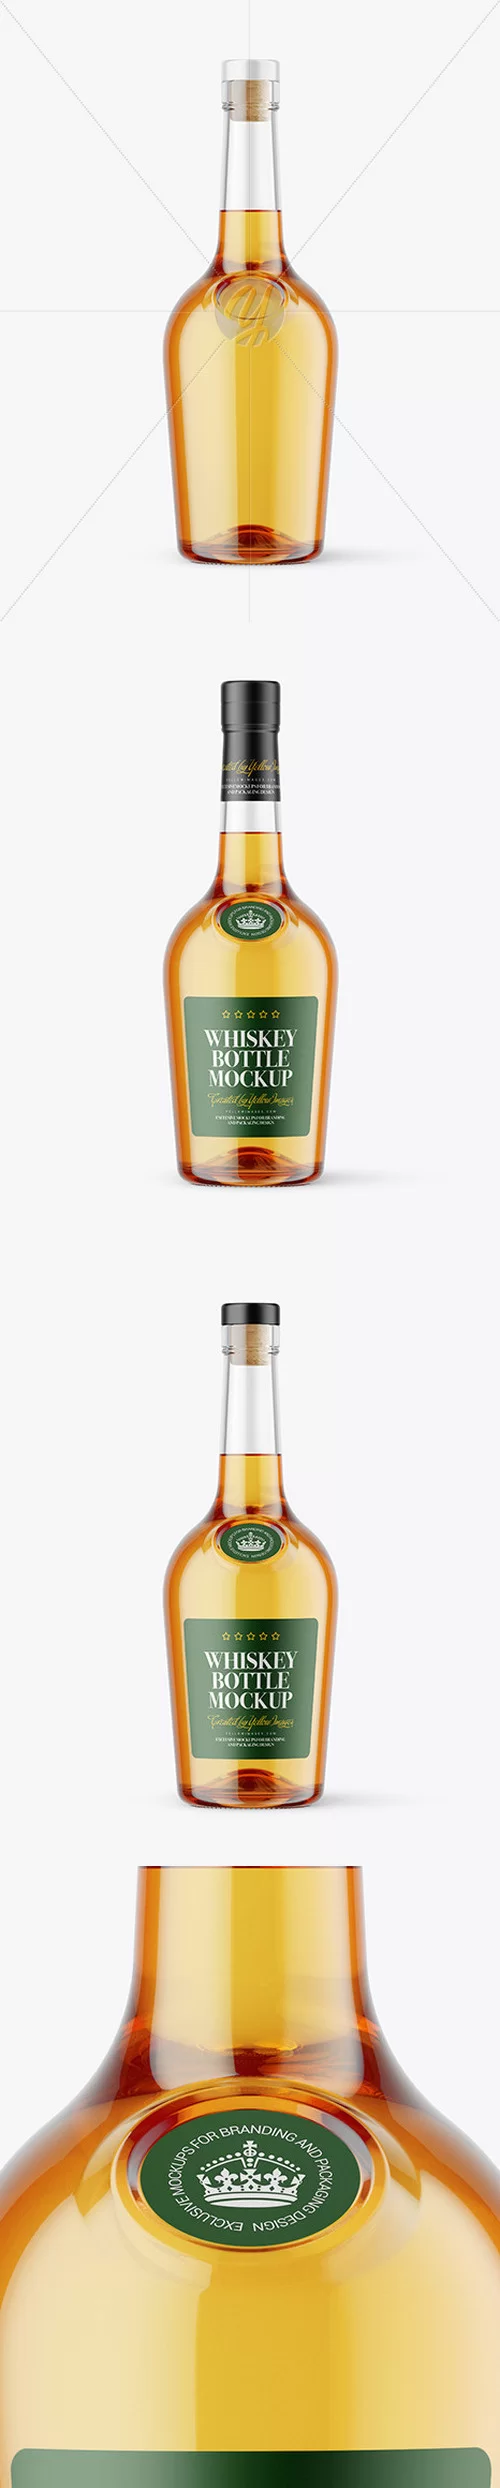 500ml Clear Glass Whiskey Bottle Mockup 47345 [TIF]